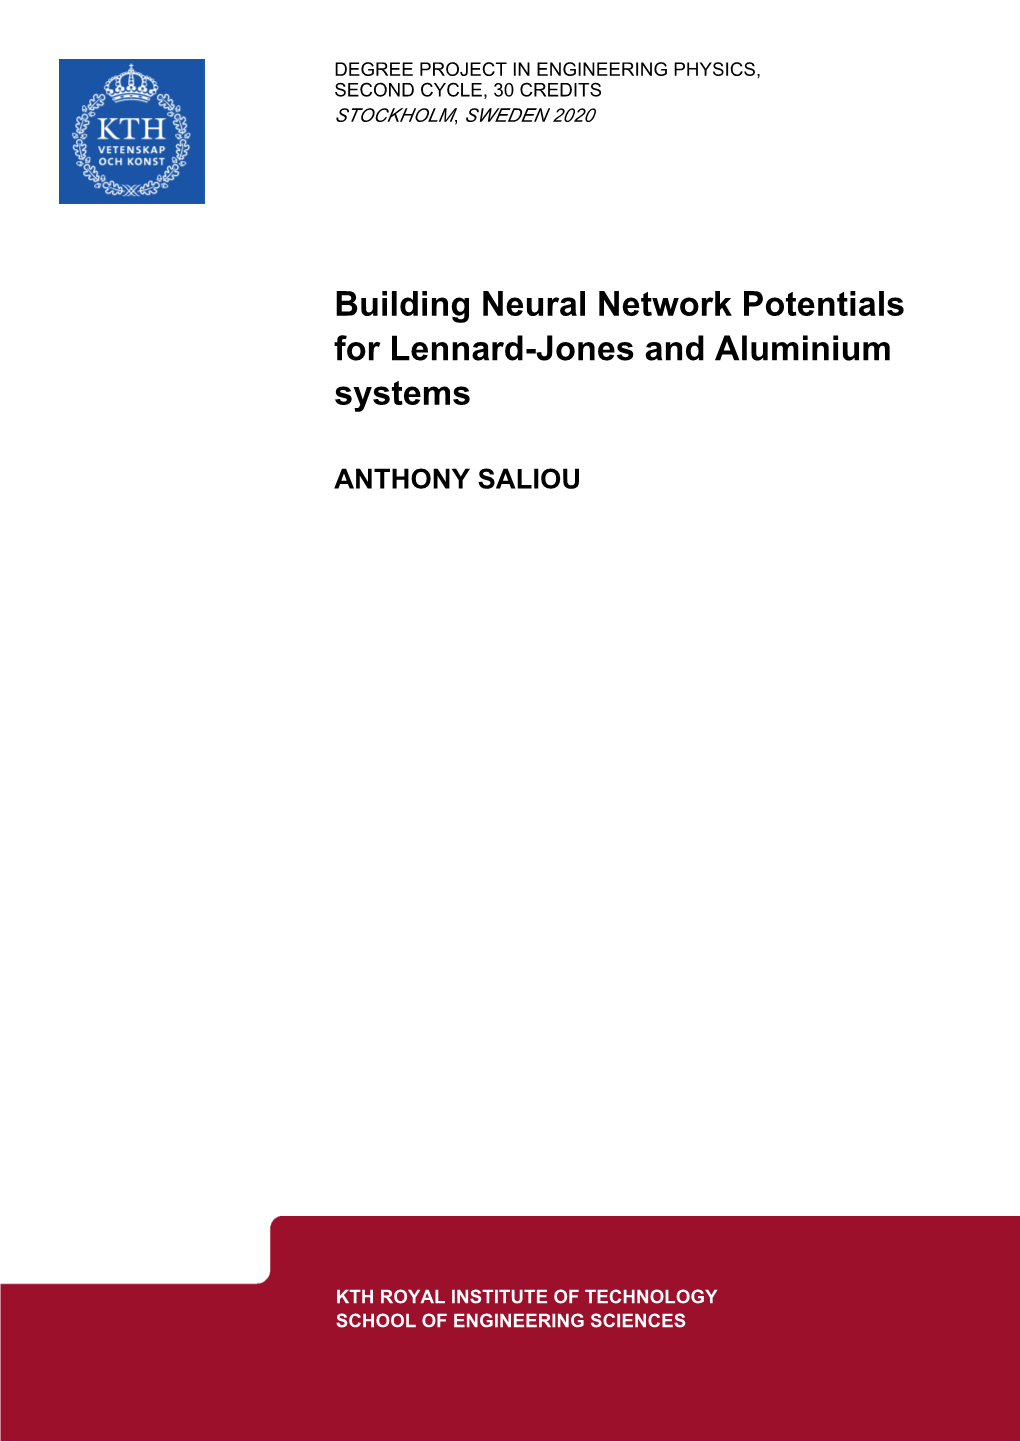 Building Neural Network Potentials for Lennard-Jones and Aluminium Systems